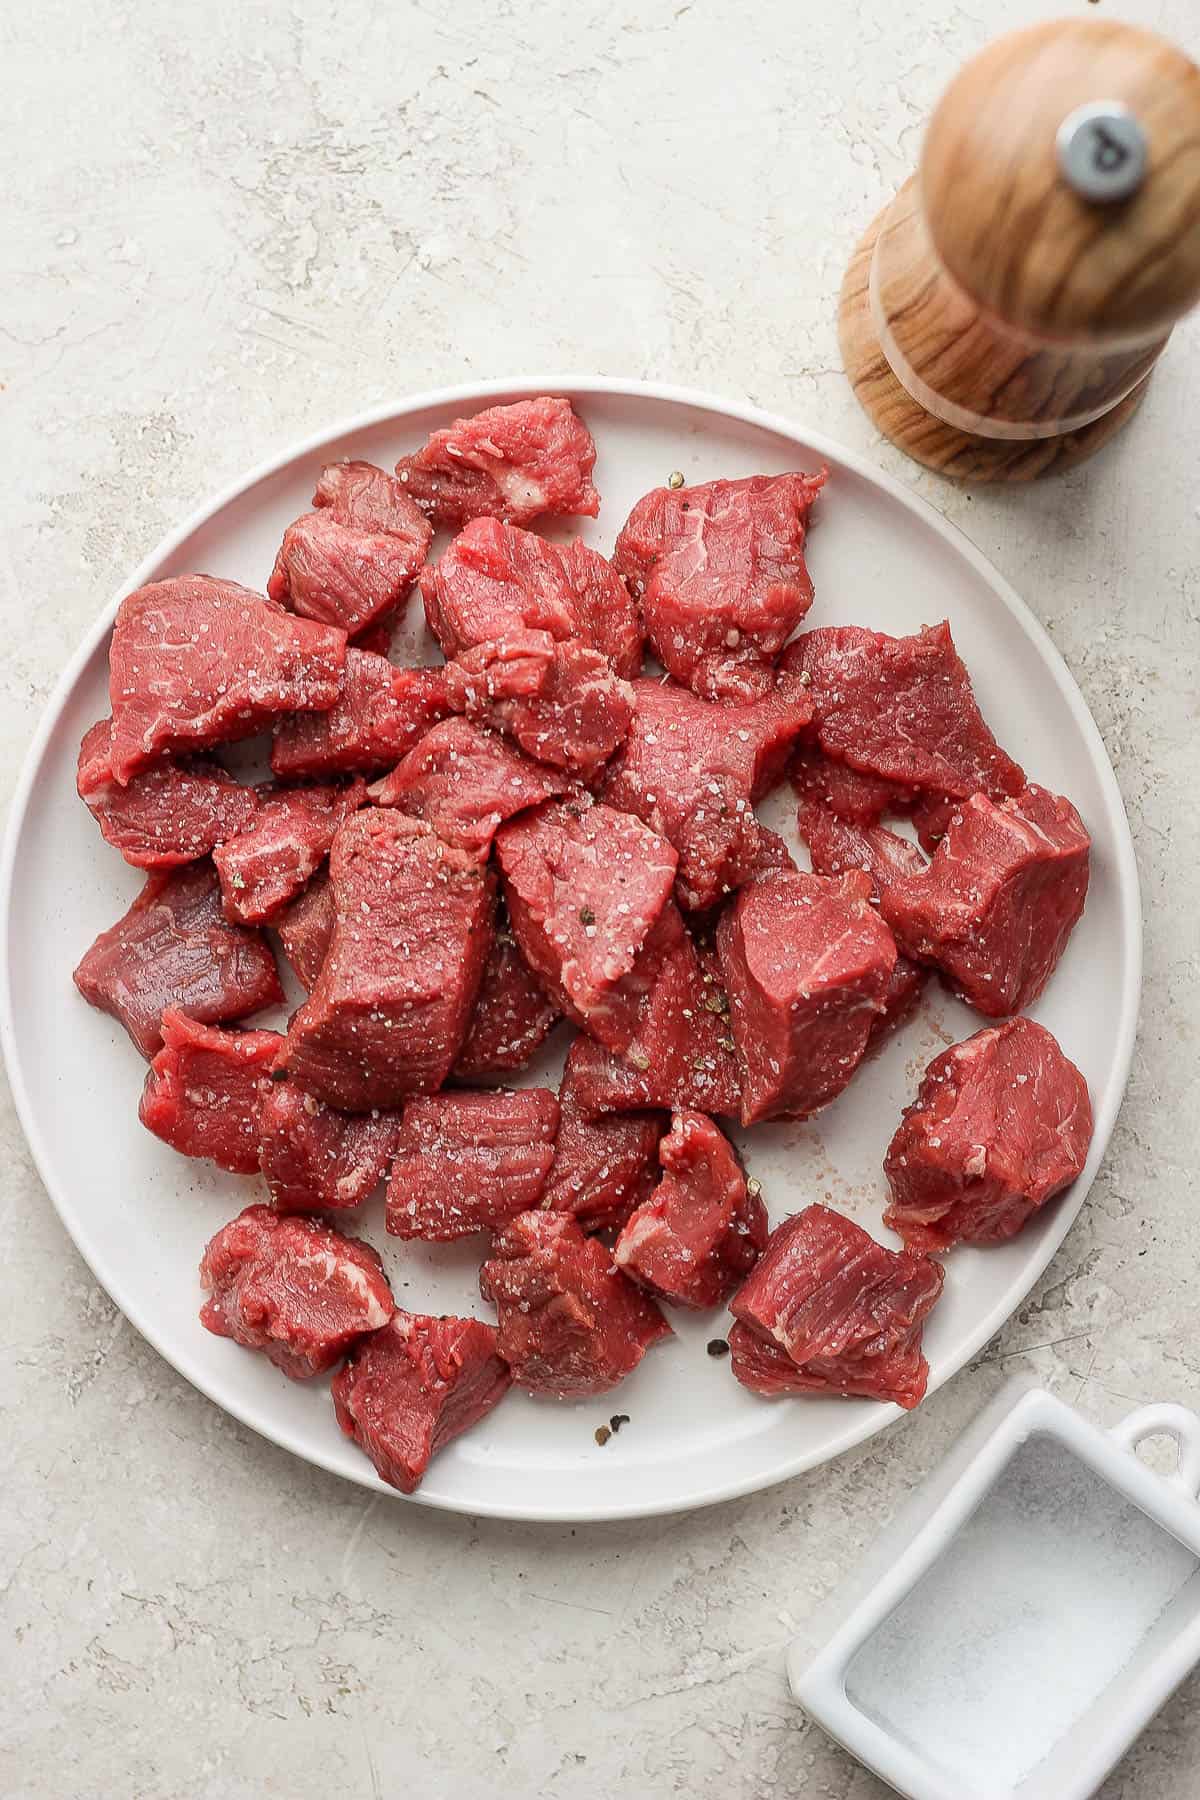 Steak tips seasoned with salt and pepper.